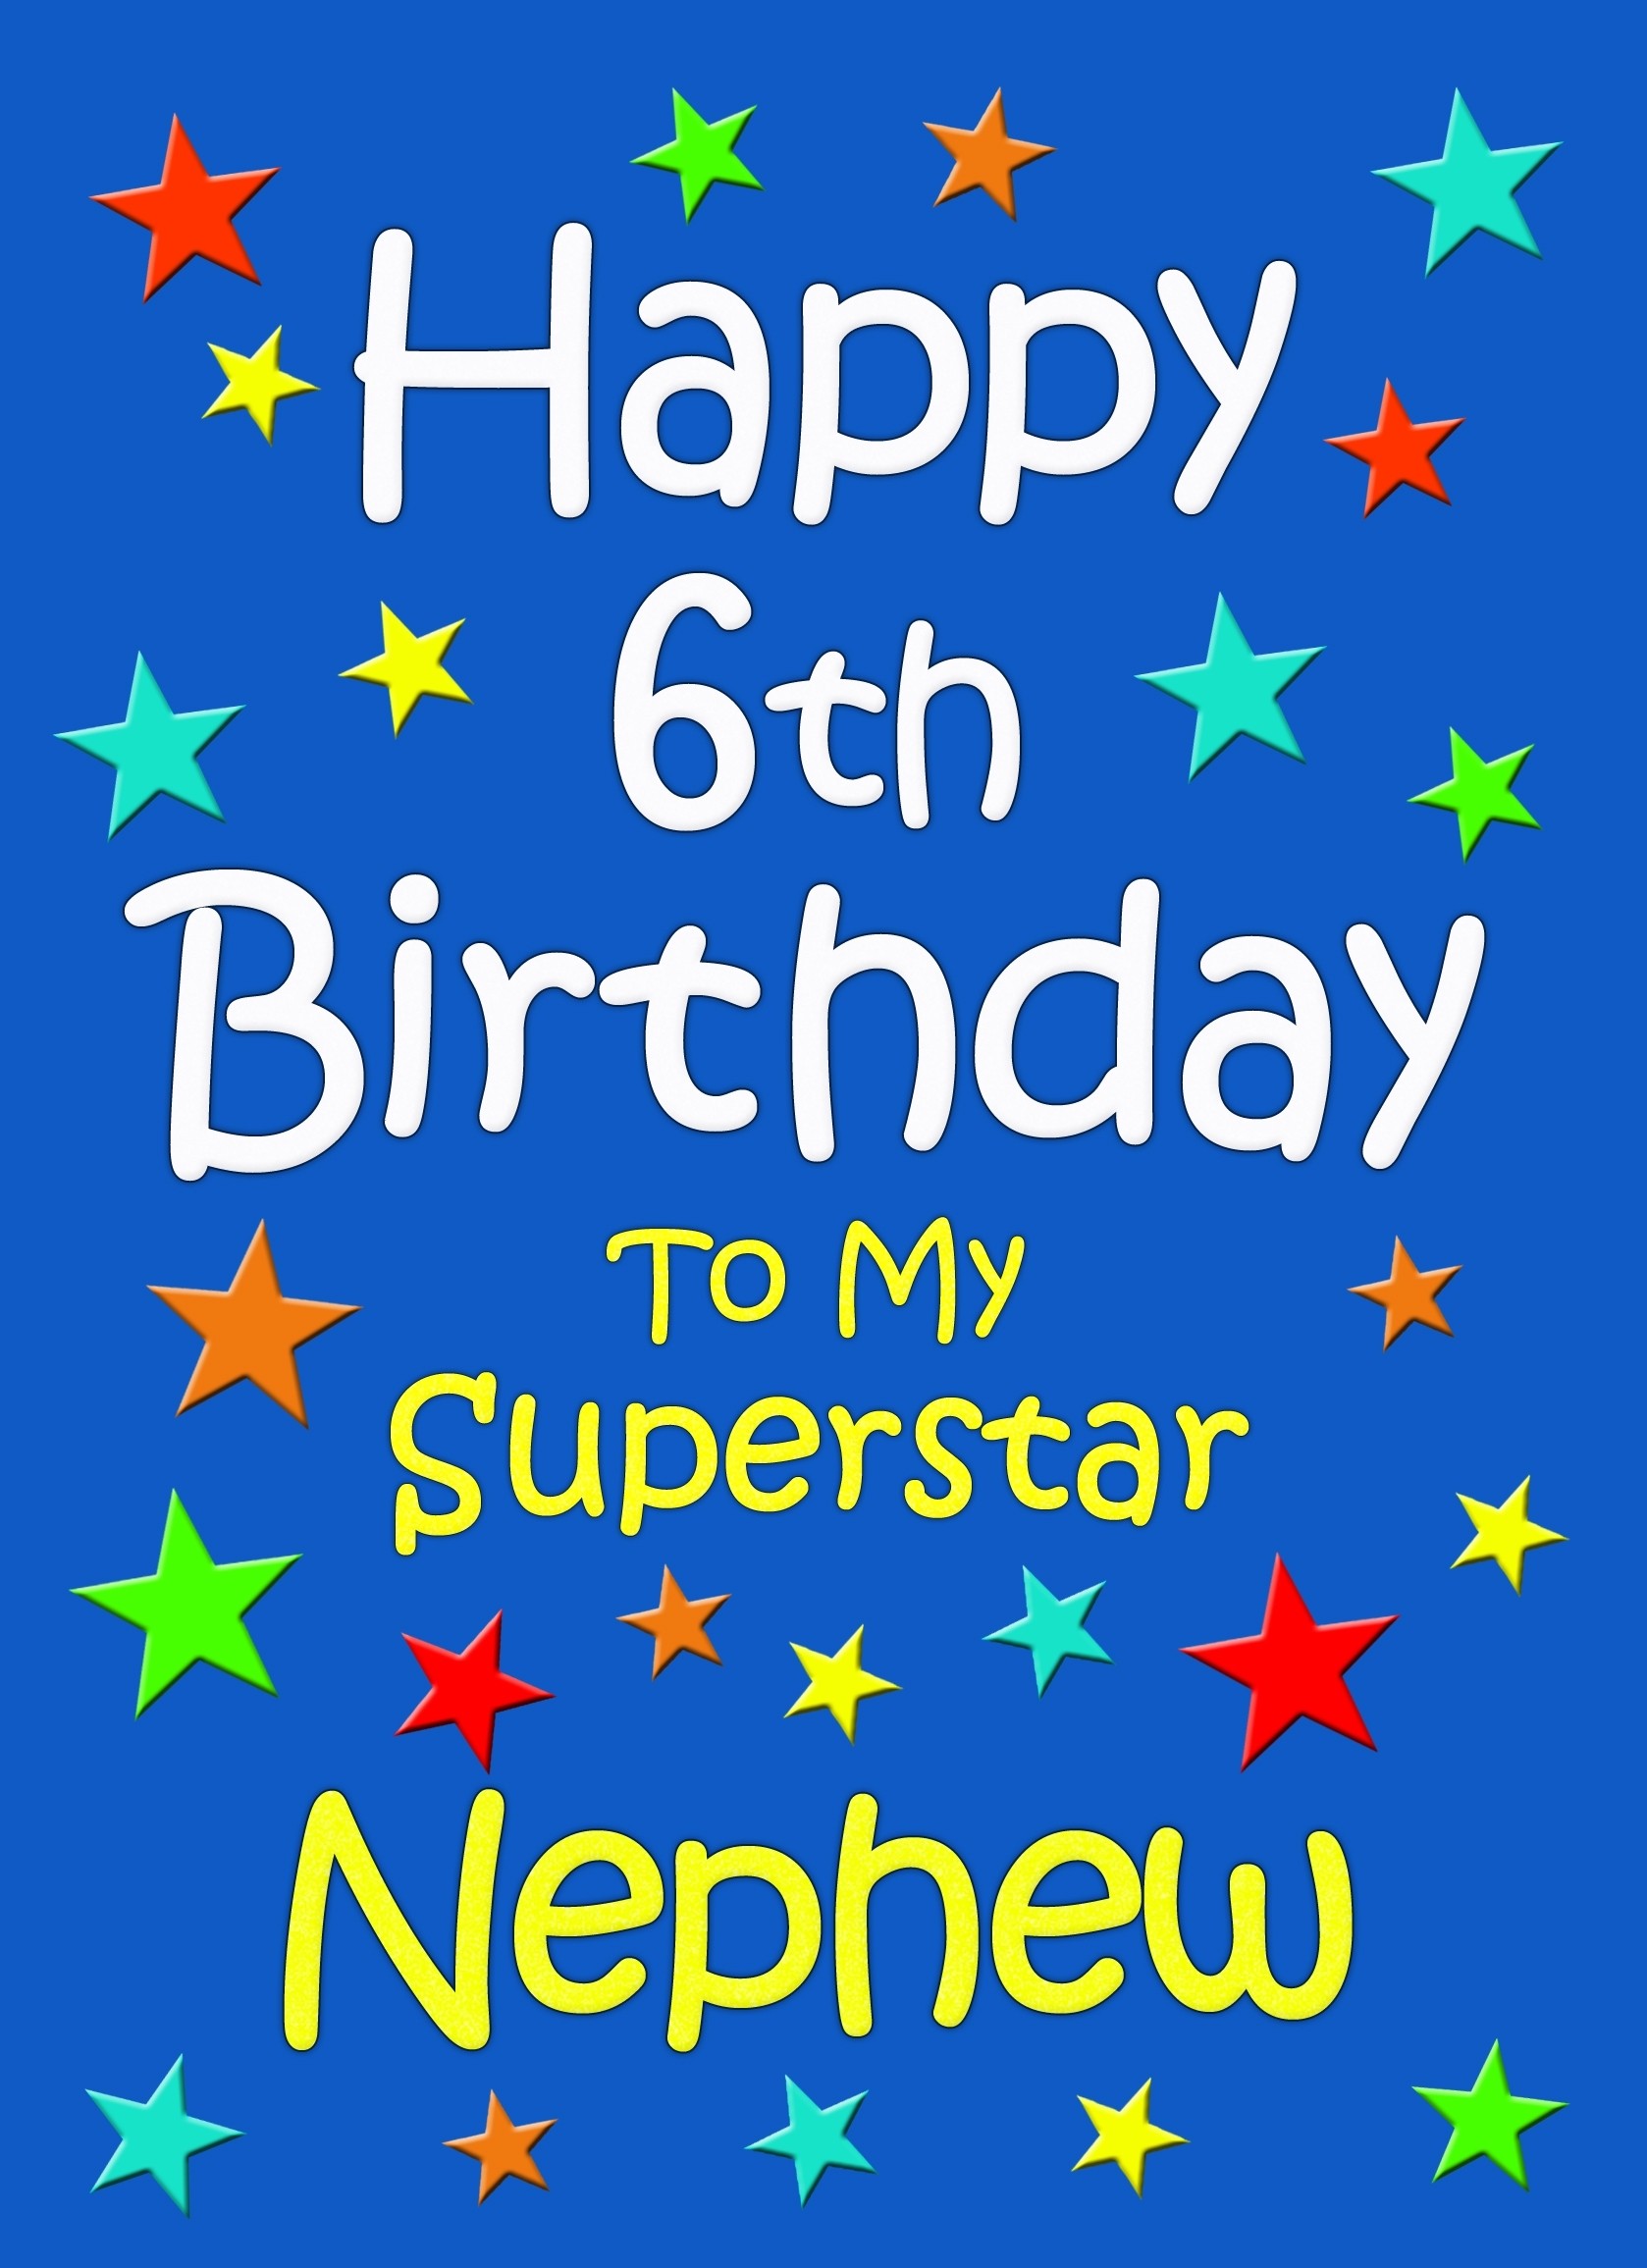 Nephew 6th Birthday Card (Blue)